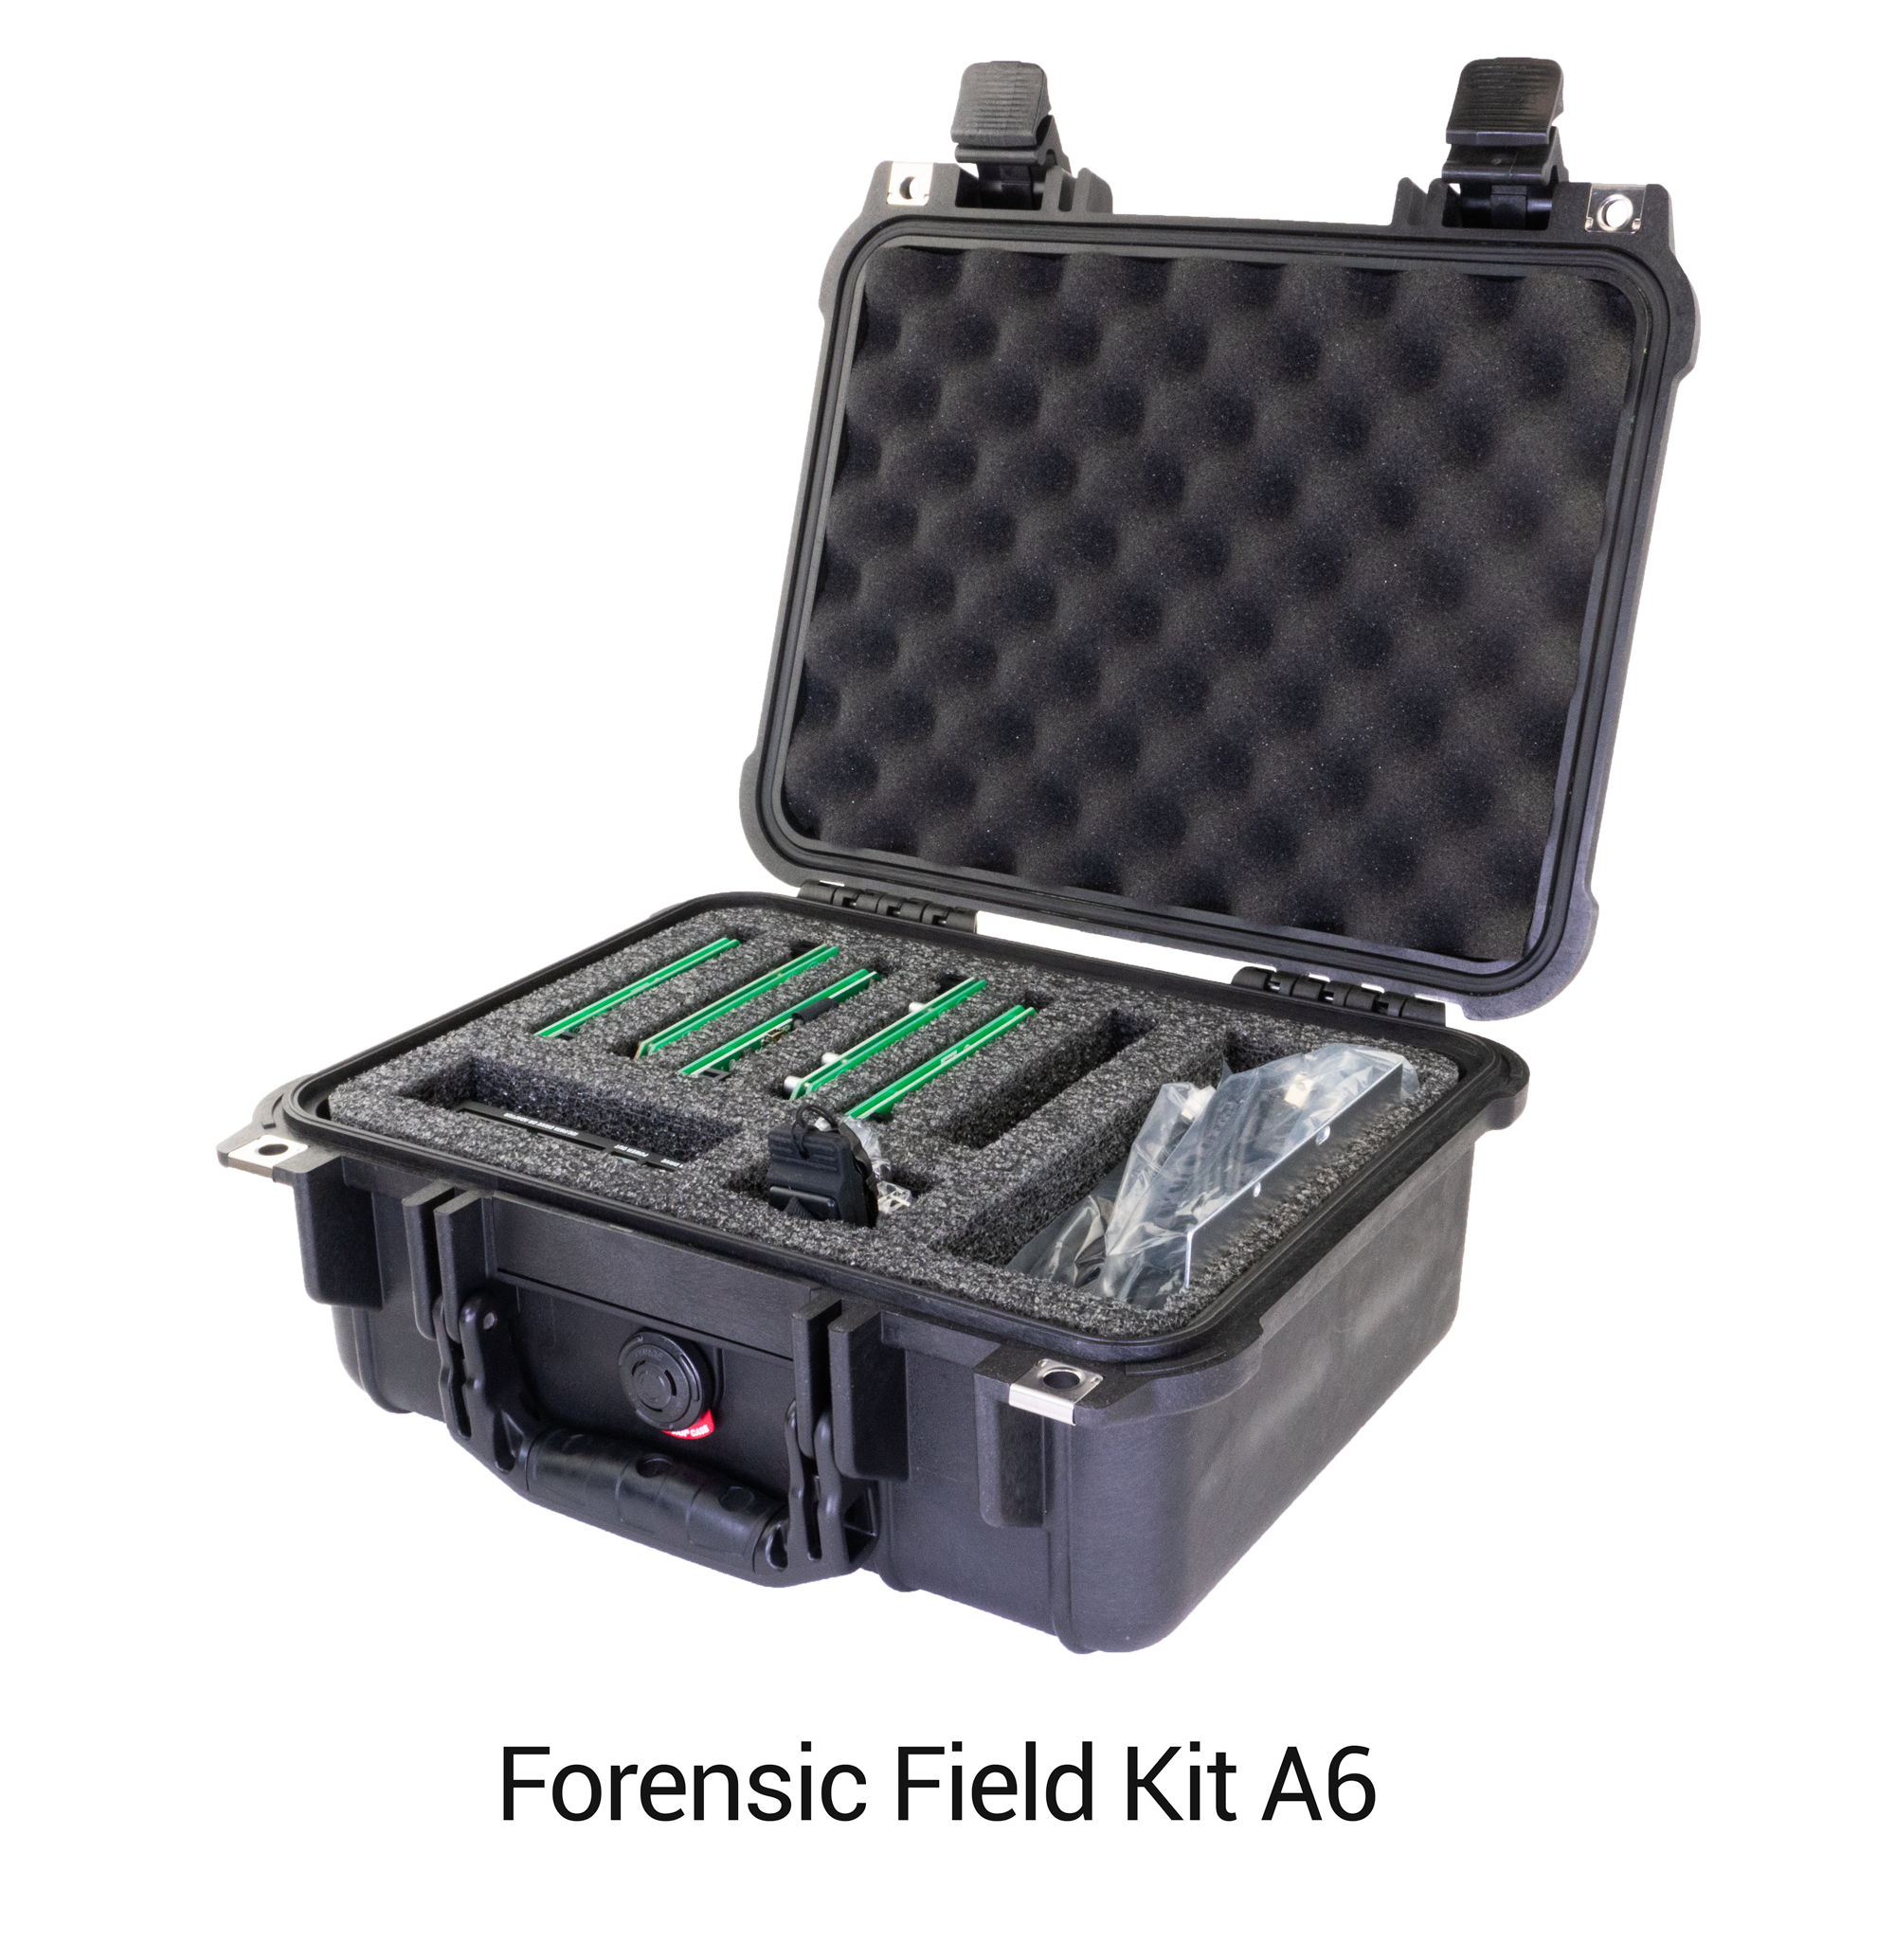 initial response field kit computer forensics